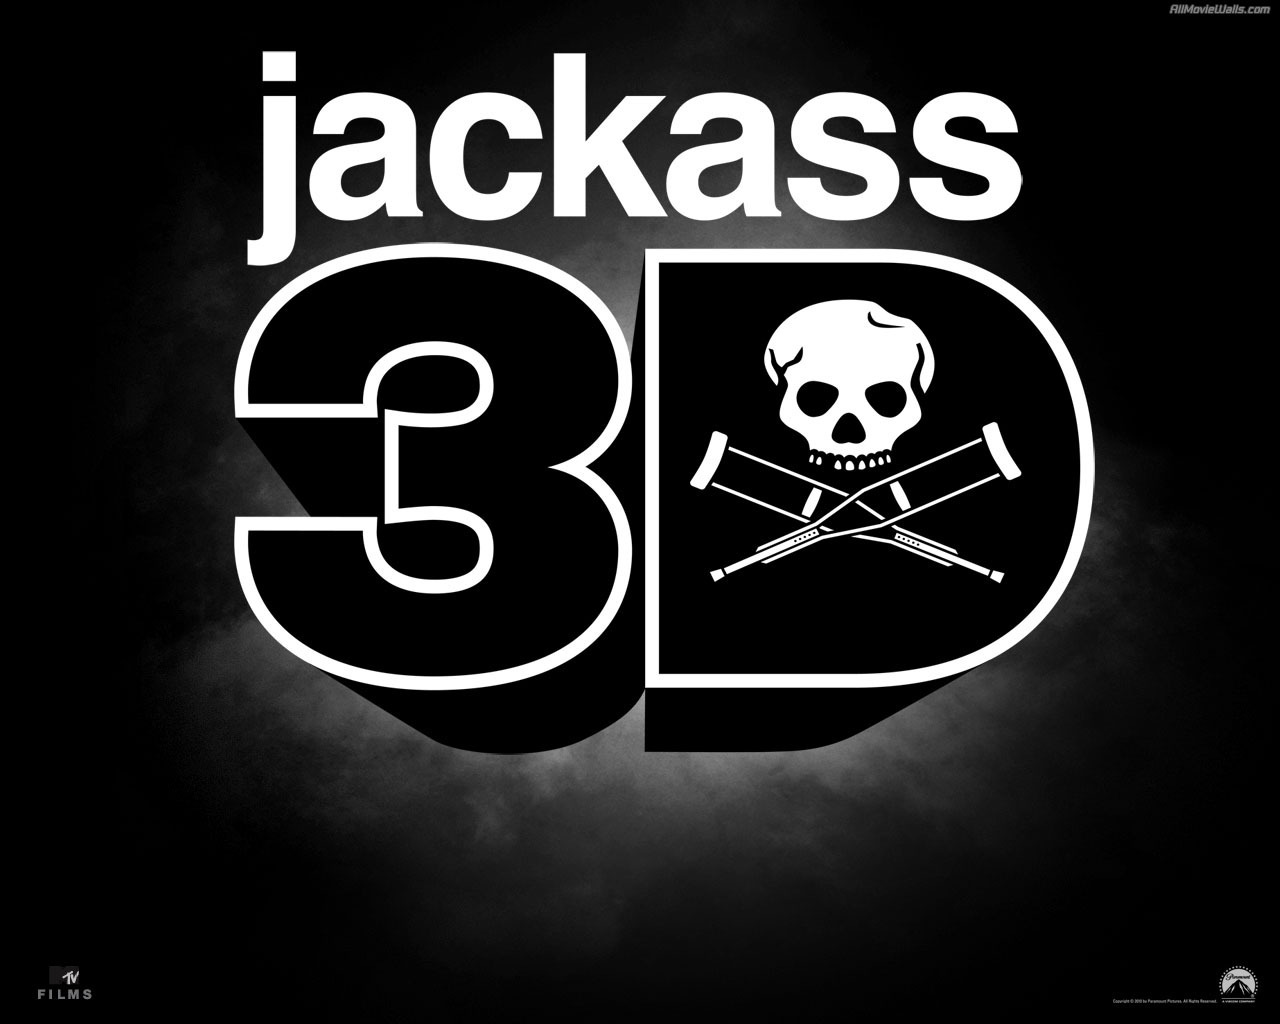 Jackass 3d Full Movie Free